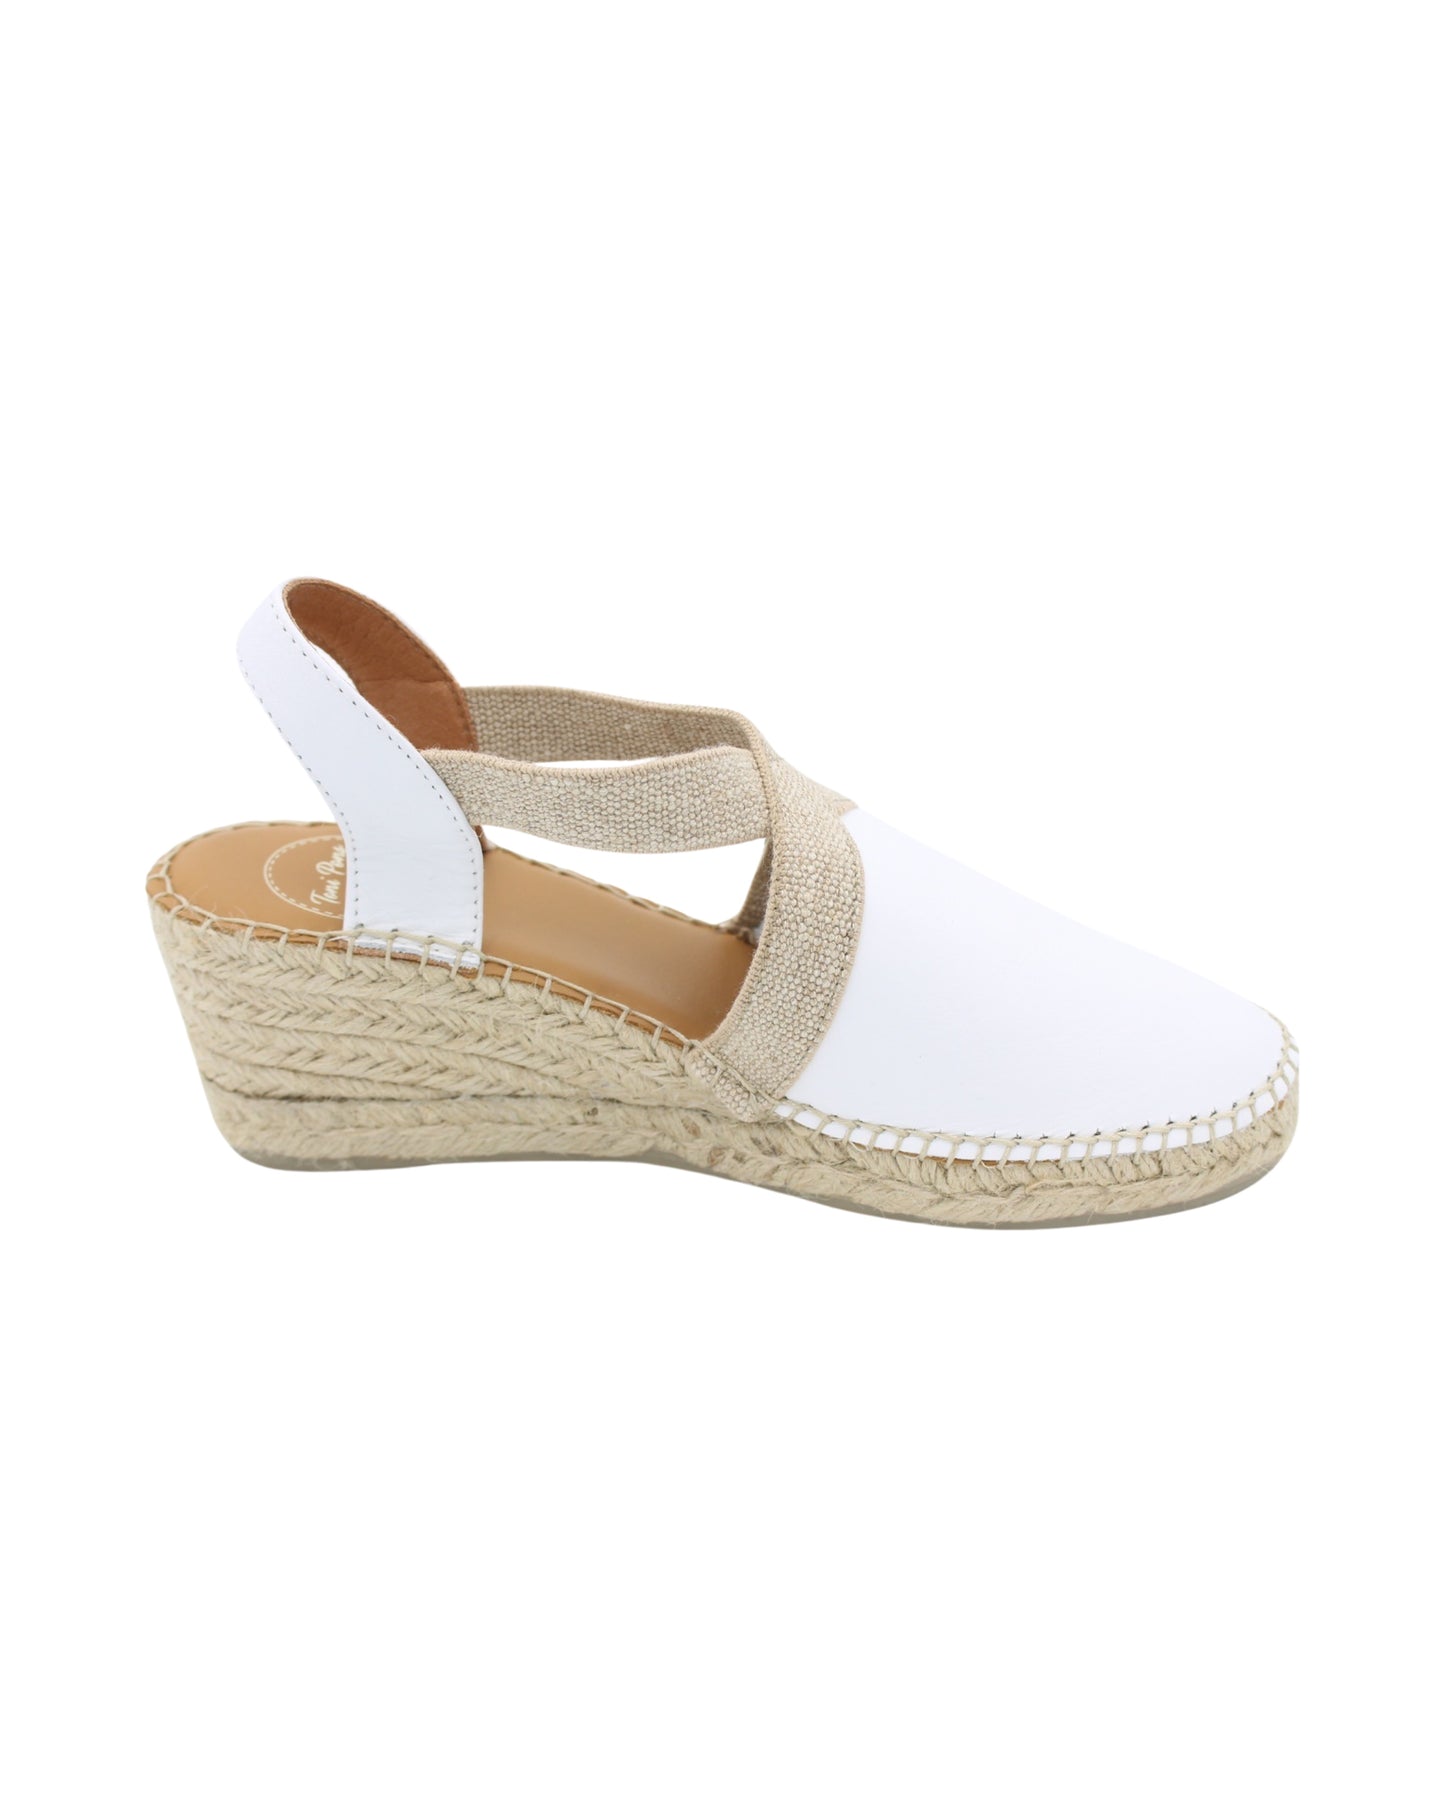 Toni Pons - Ladies Shoes Espadrilles White (2068)